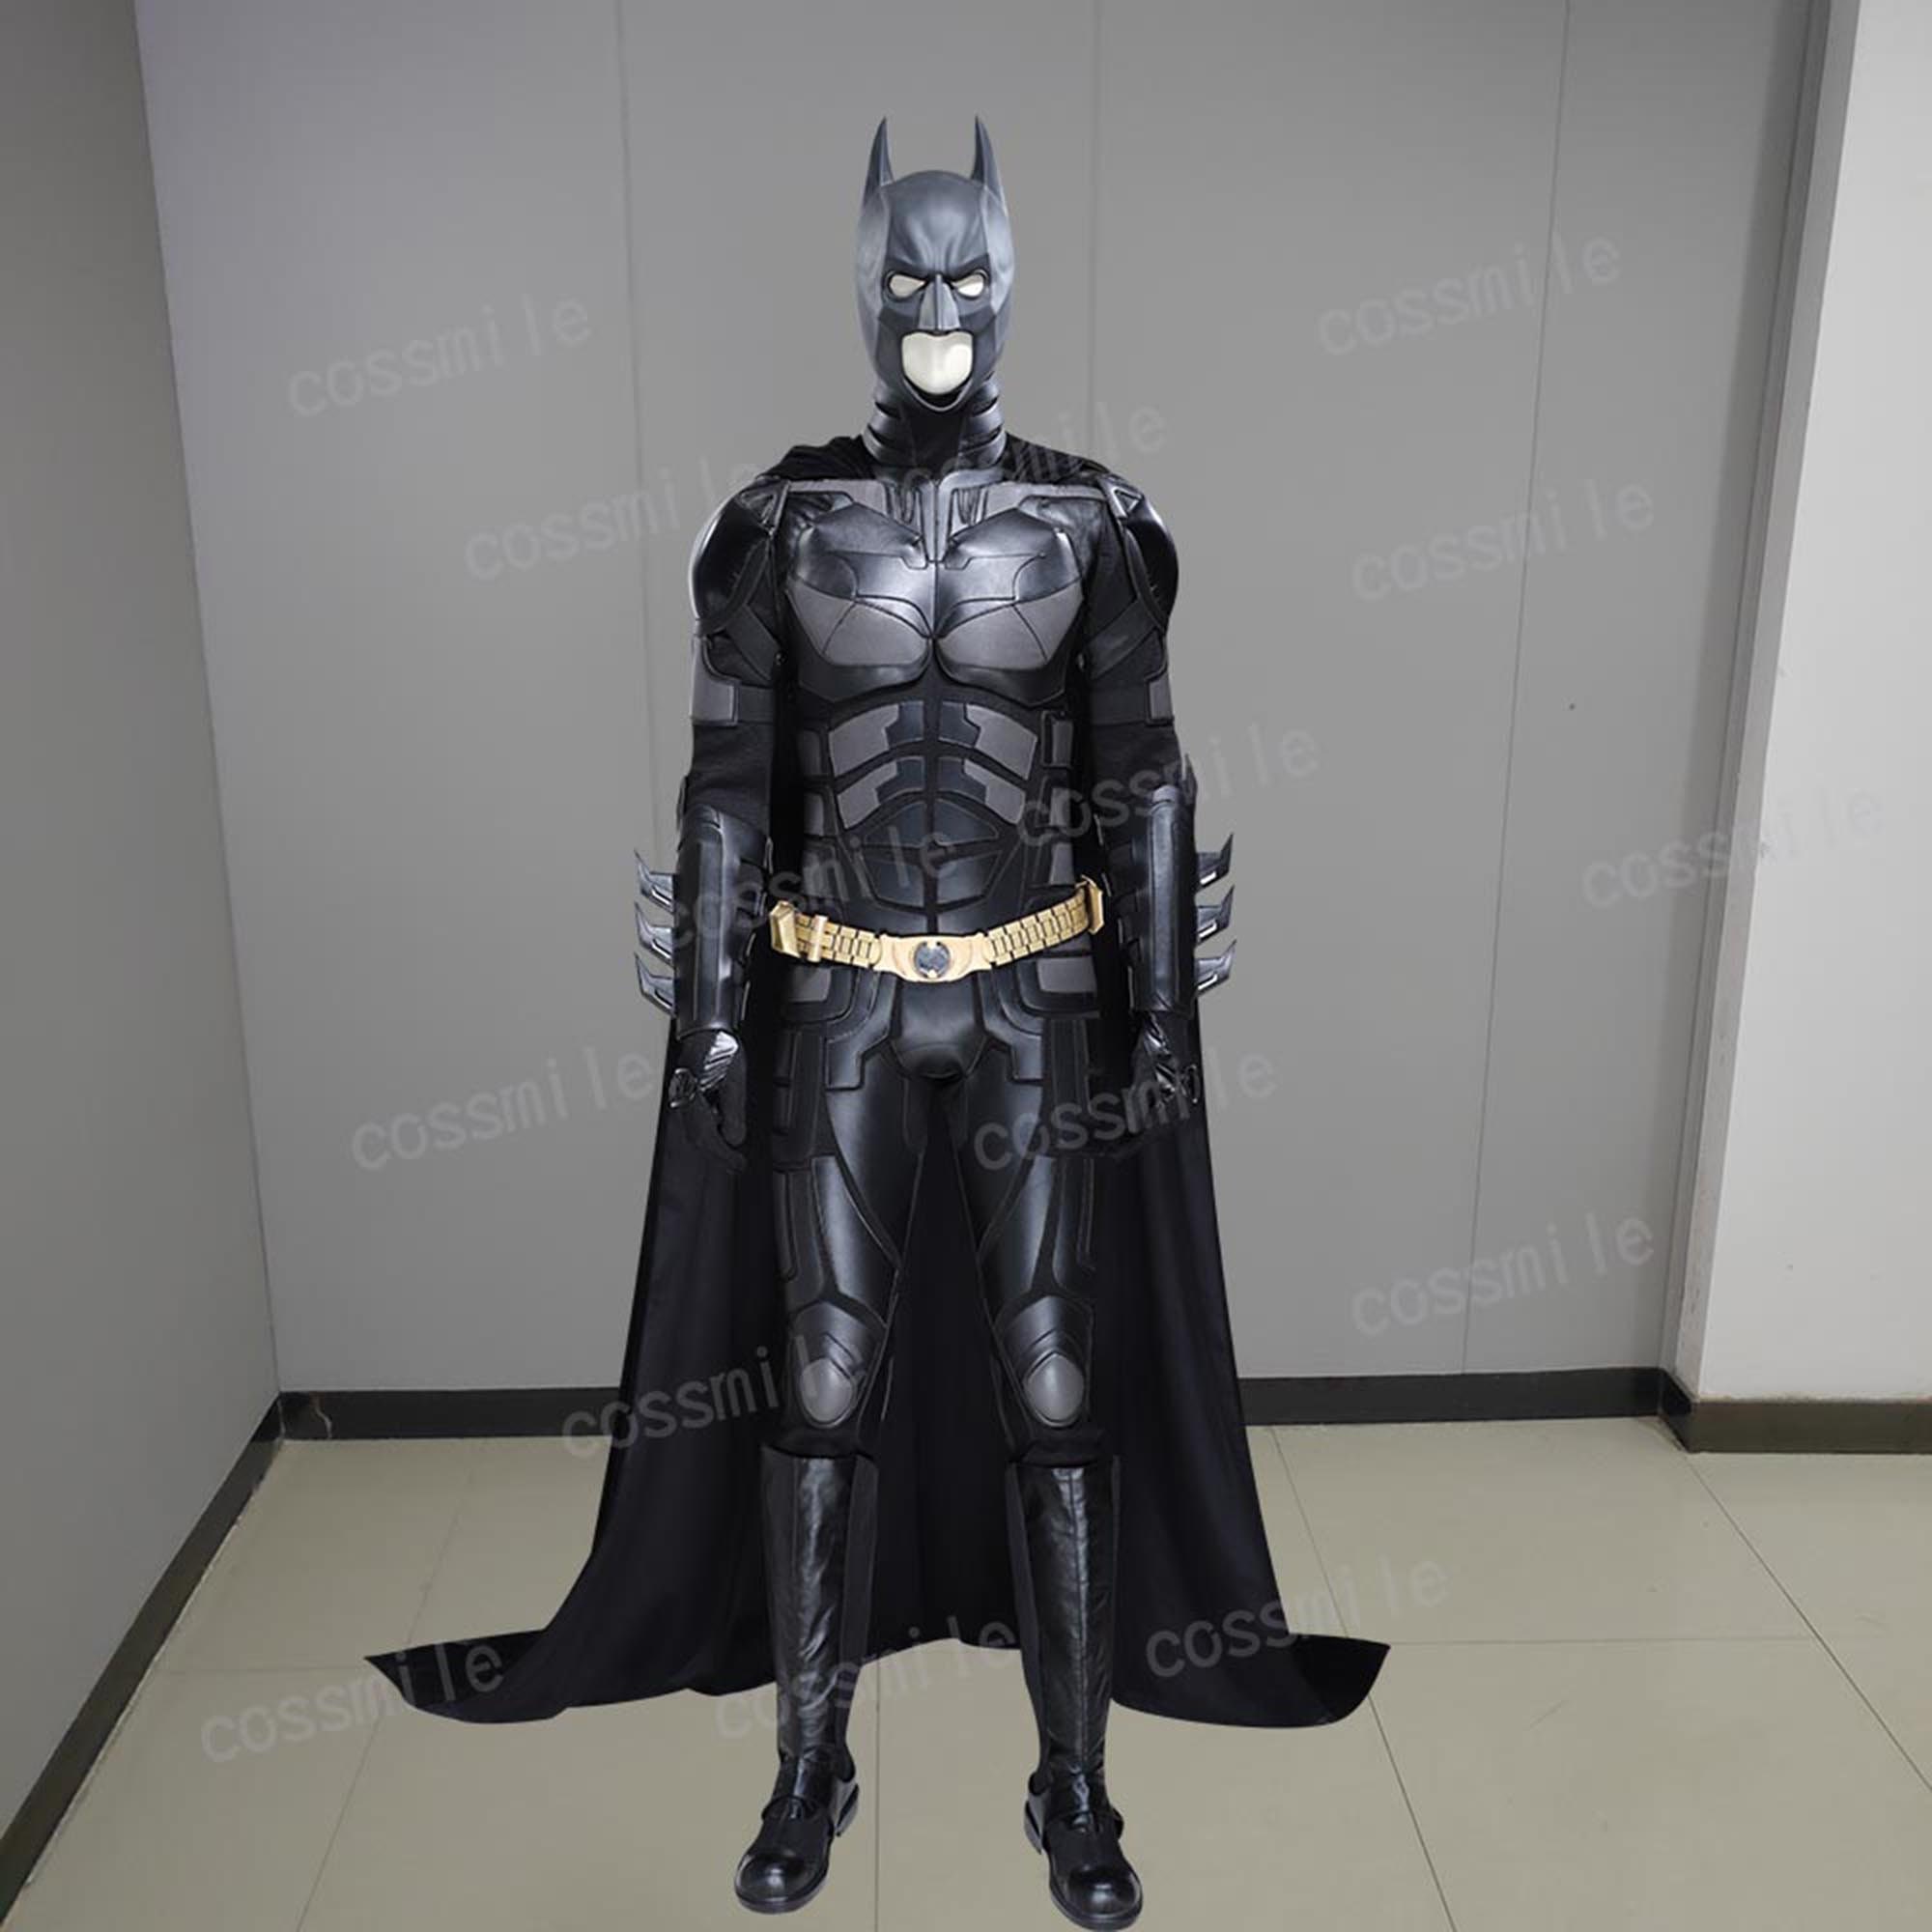 MOVIE BATMAN Cosplay Bruce Wayne Armor Cappotto Costume Costume Di Halloween Regalo 